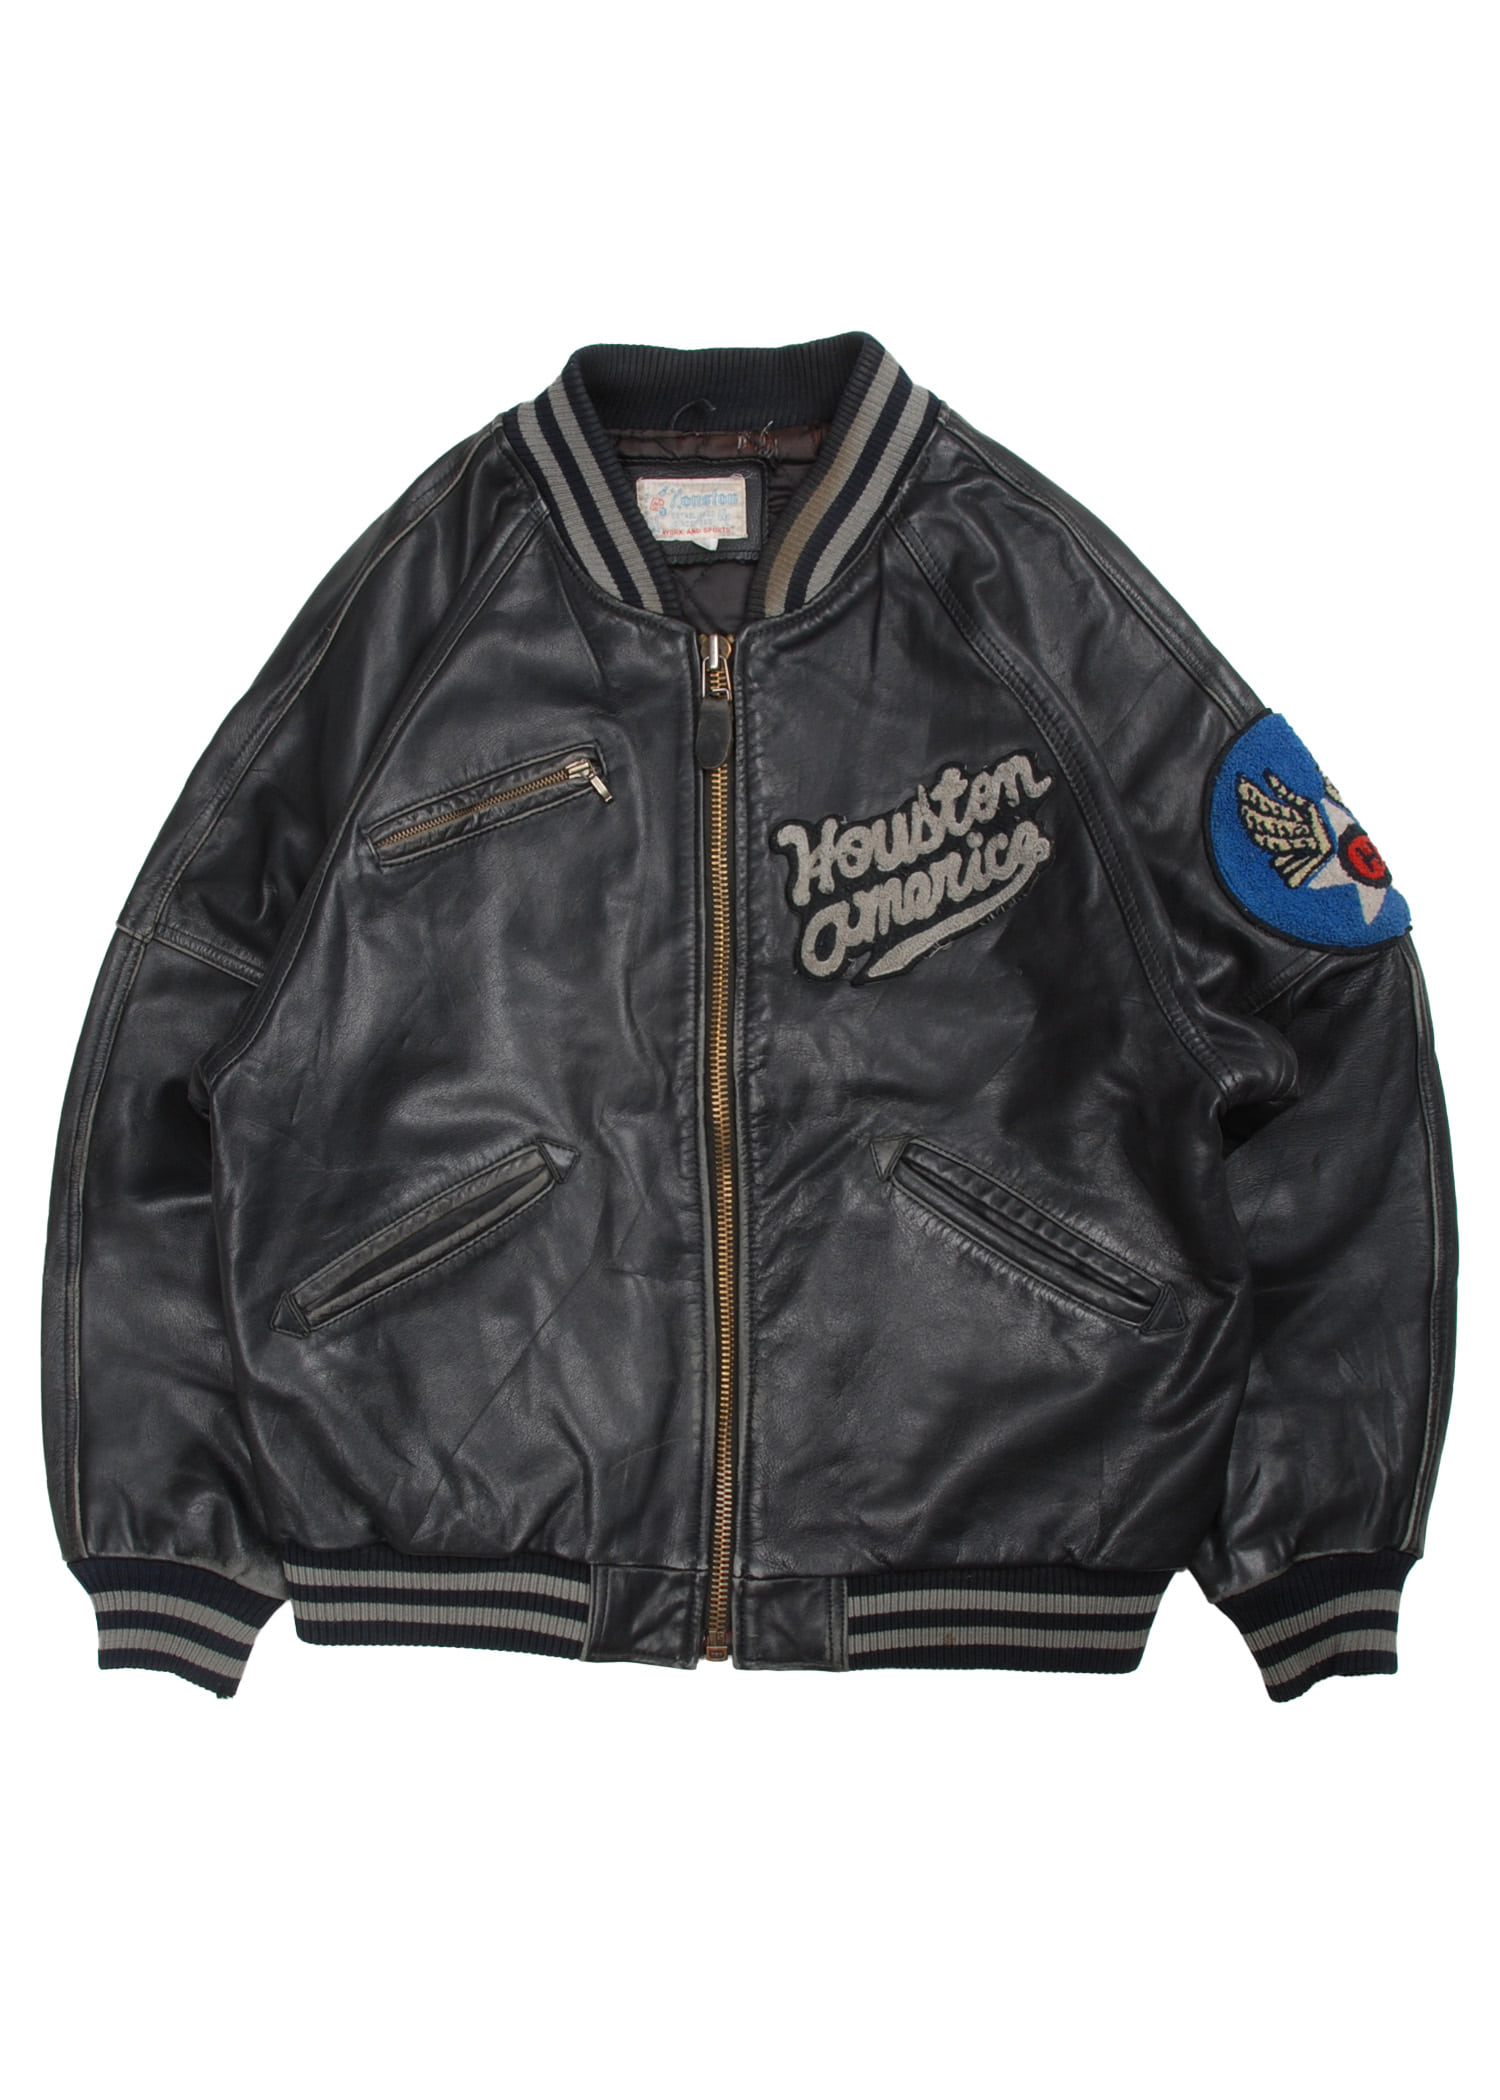 HOUSTON all leather varsity jacket